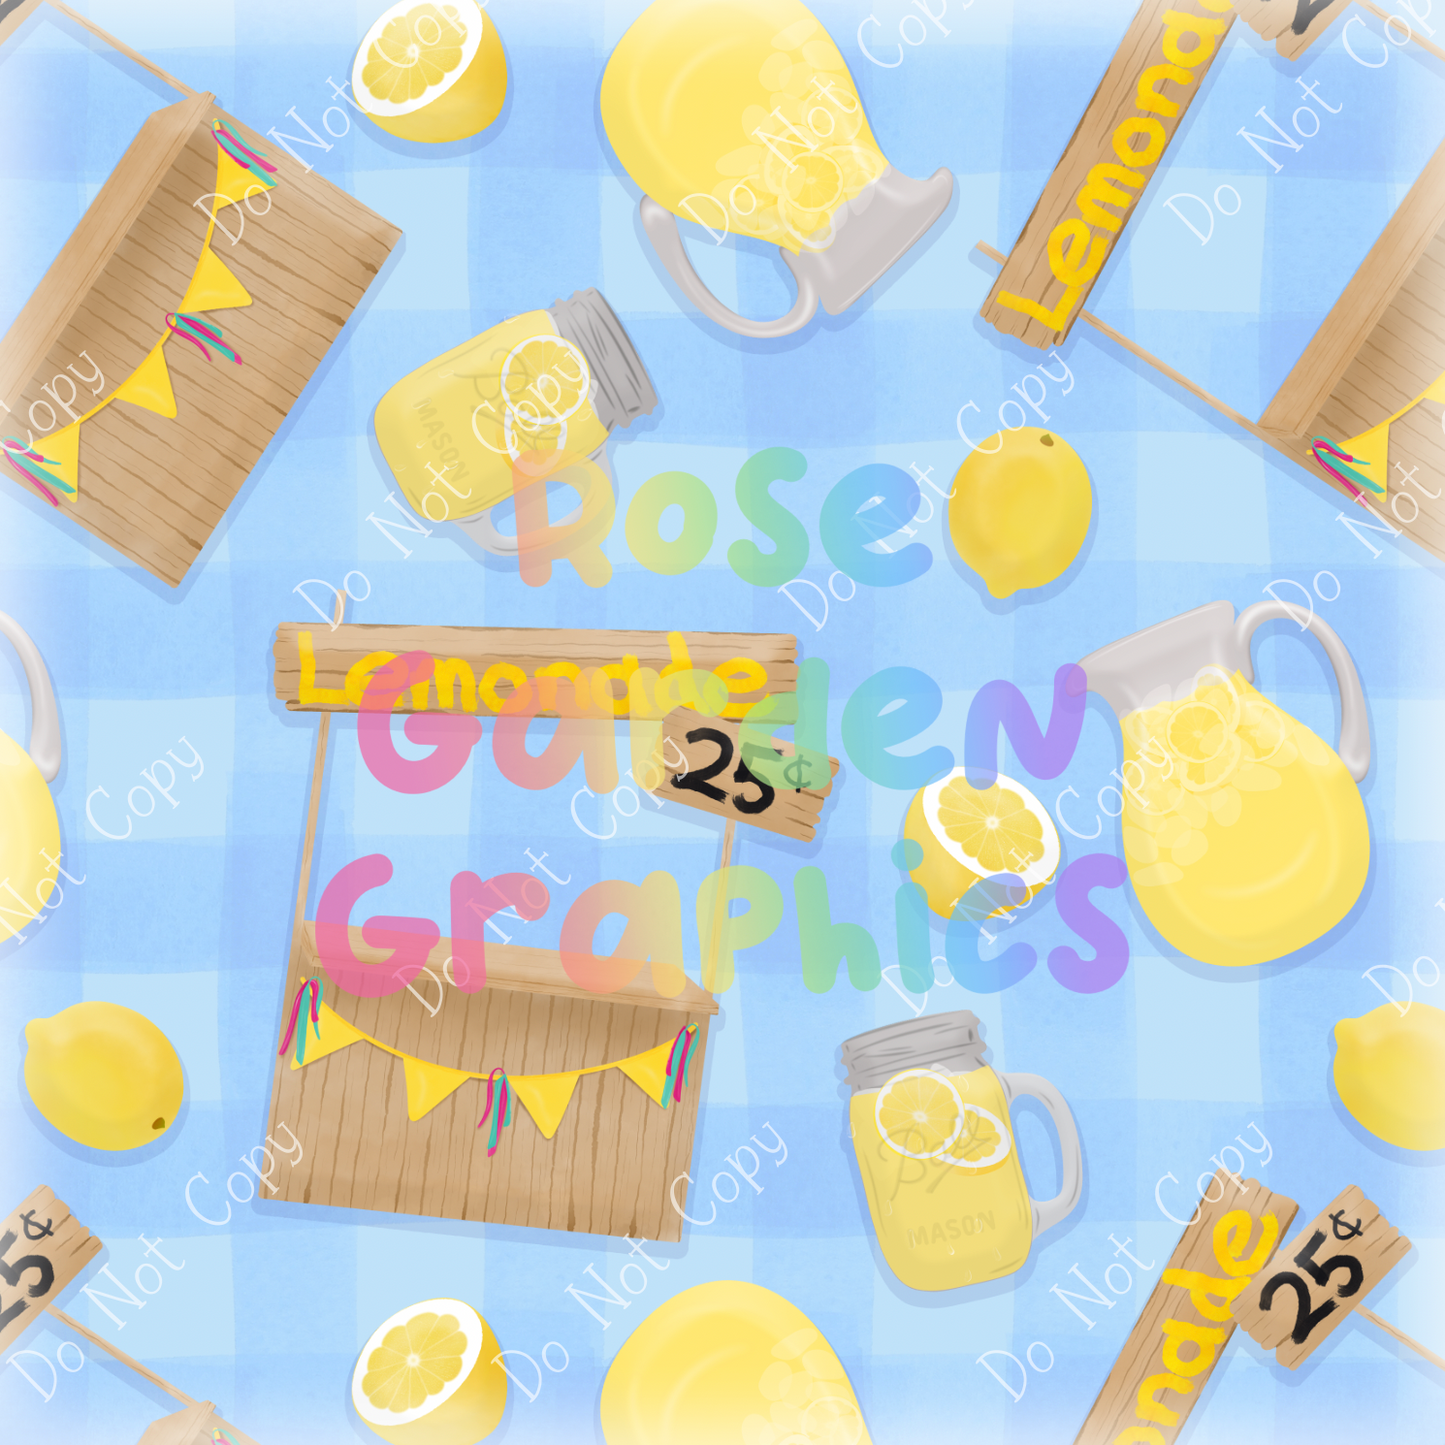 Lemonade Stand Seamless Images